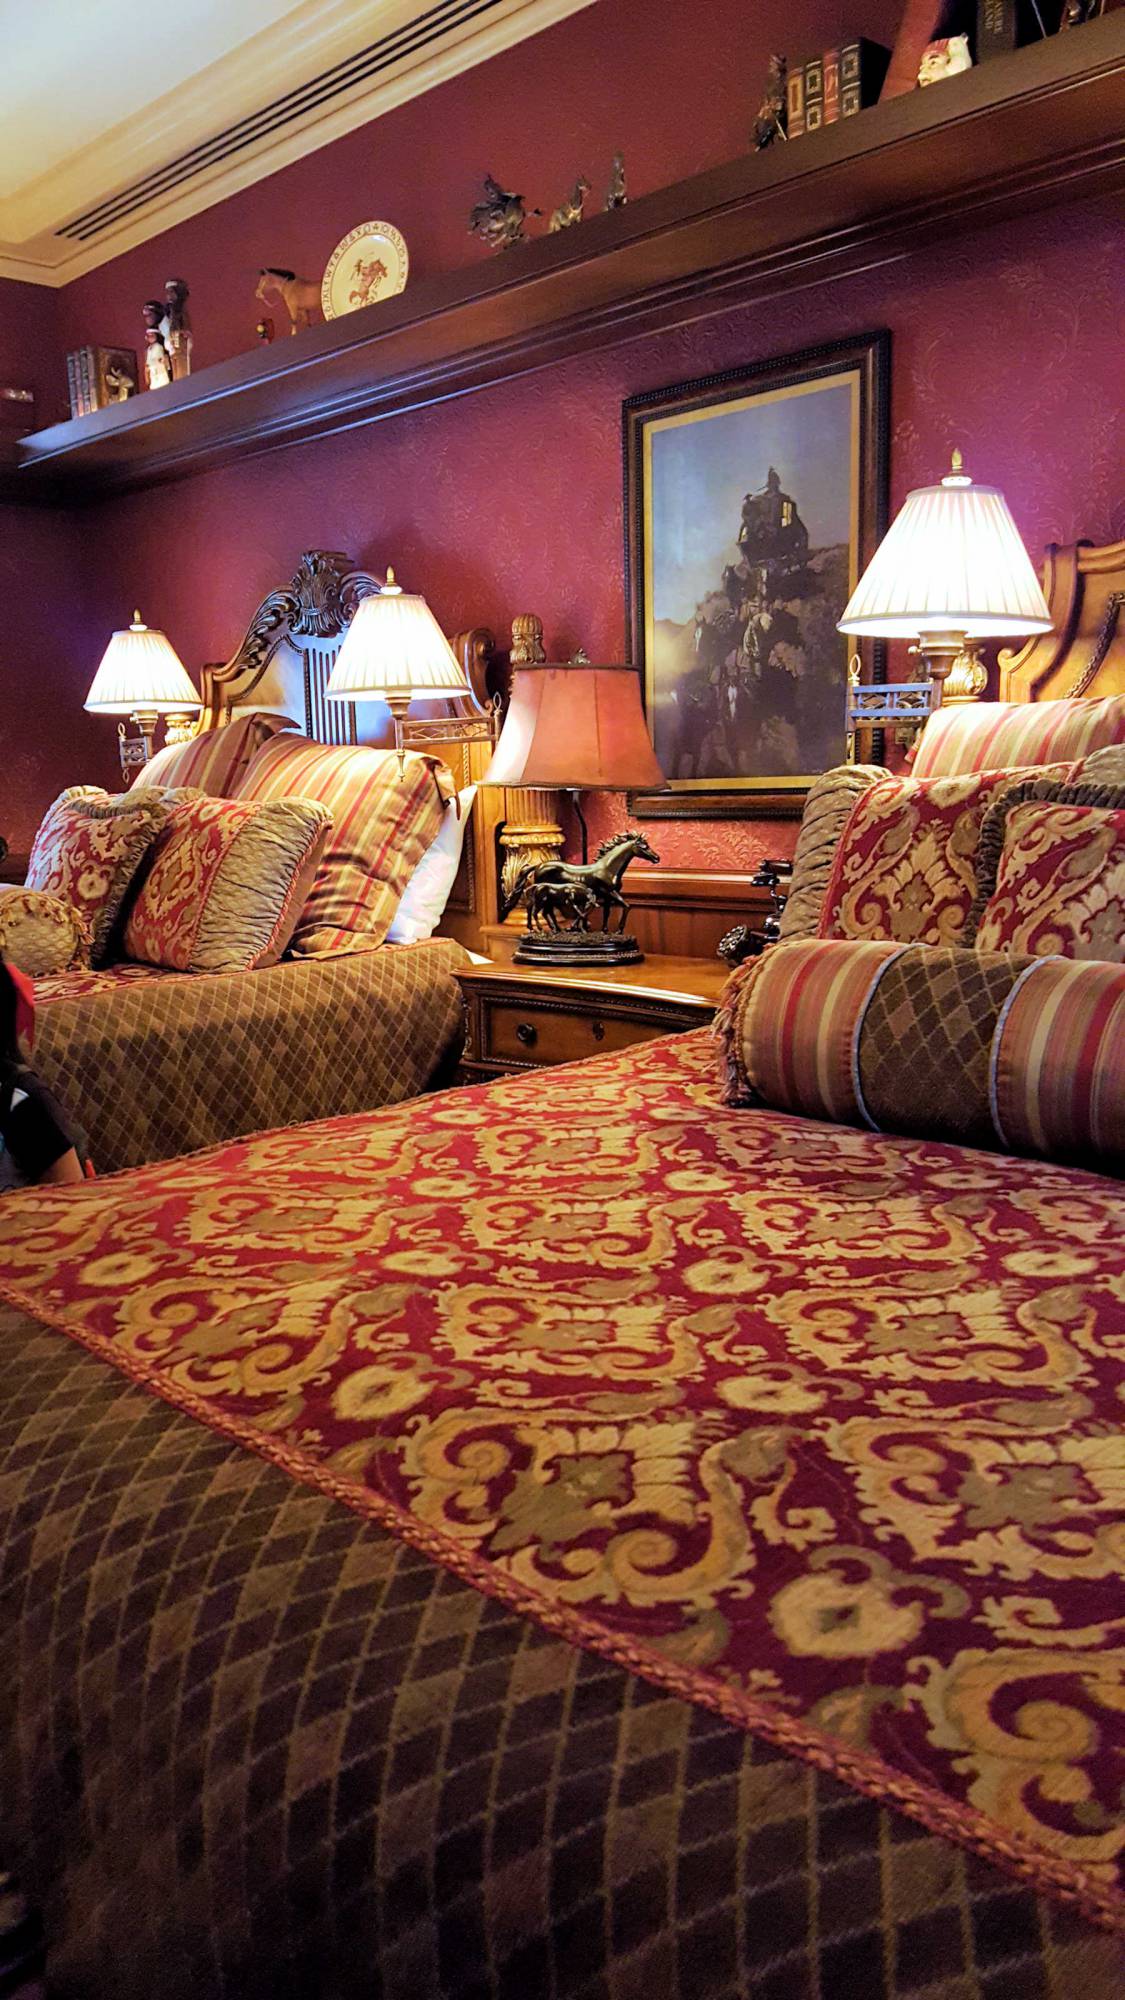 Disneyland New Orleans Square Dream Suite second bedroom